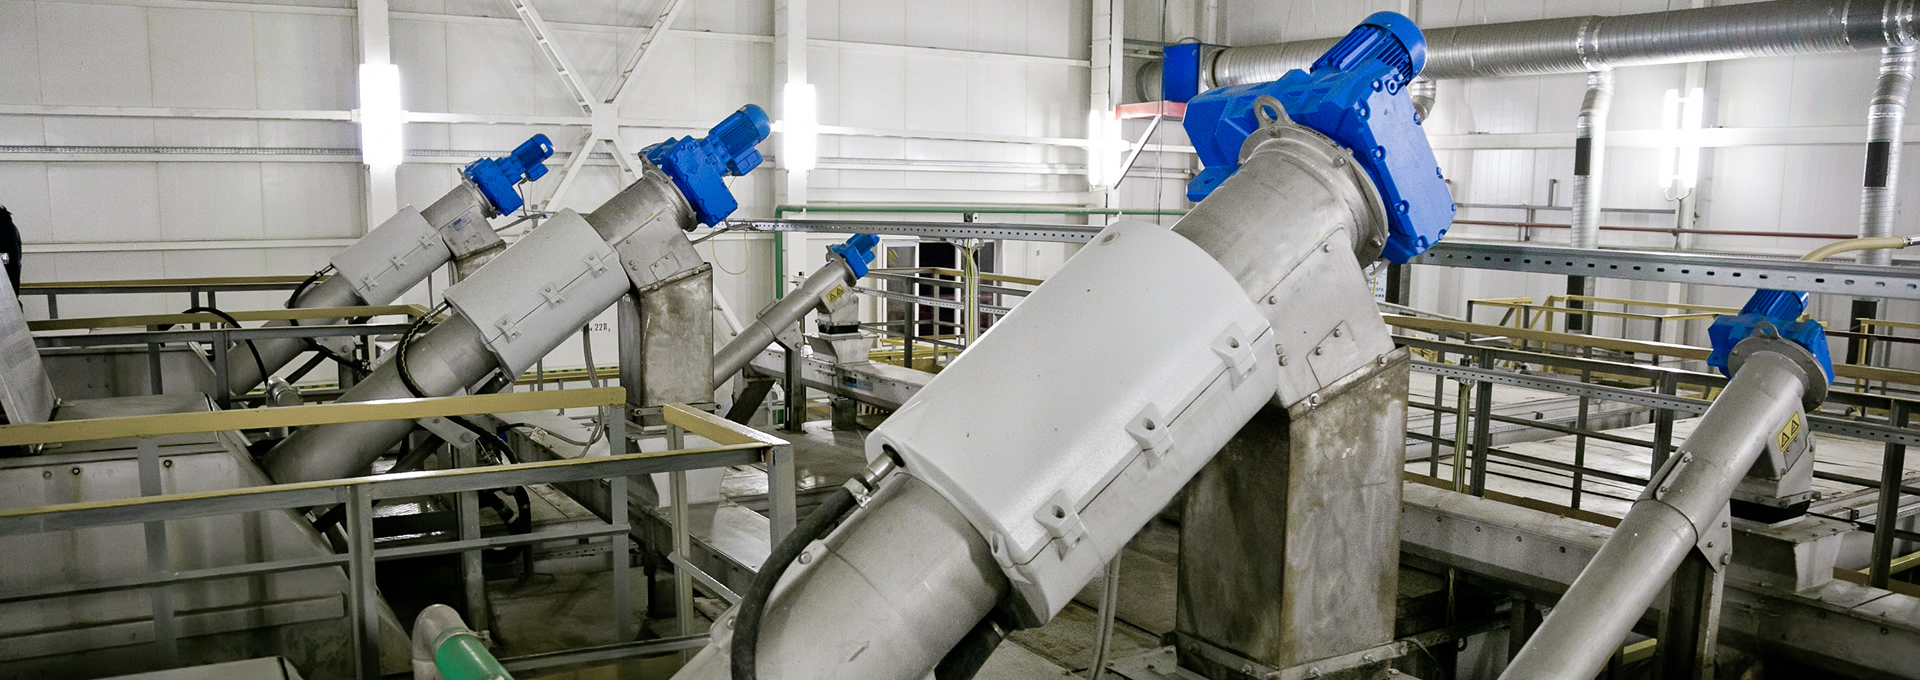 Sistema de centrífuga automatizado para tratamiento de aguas aceitosas